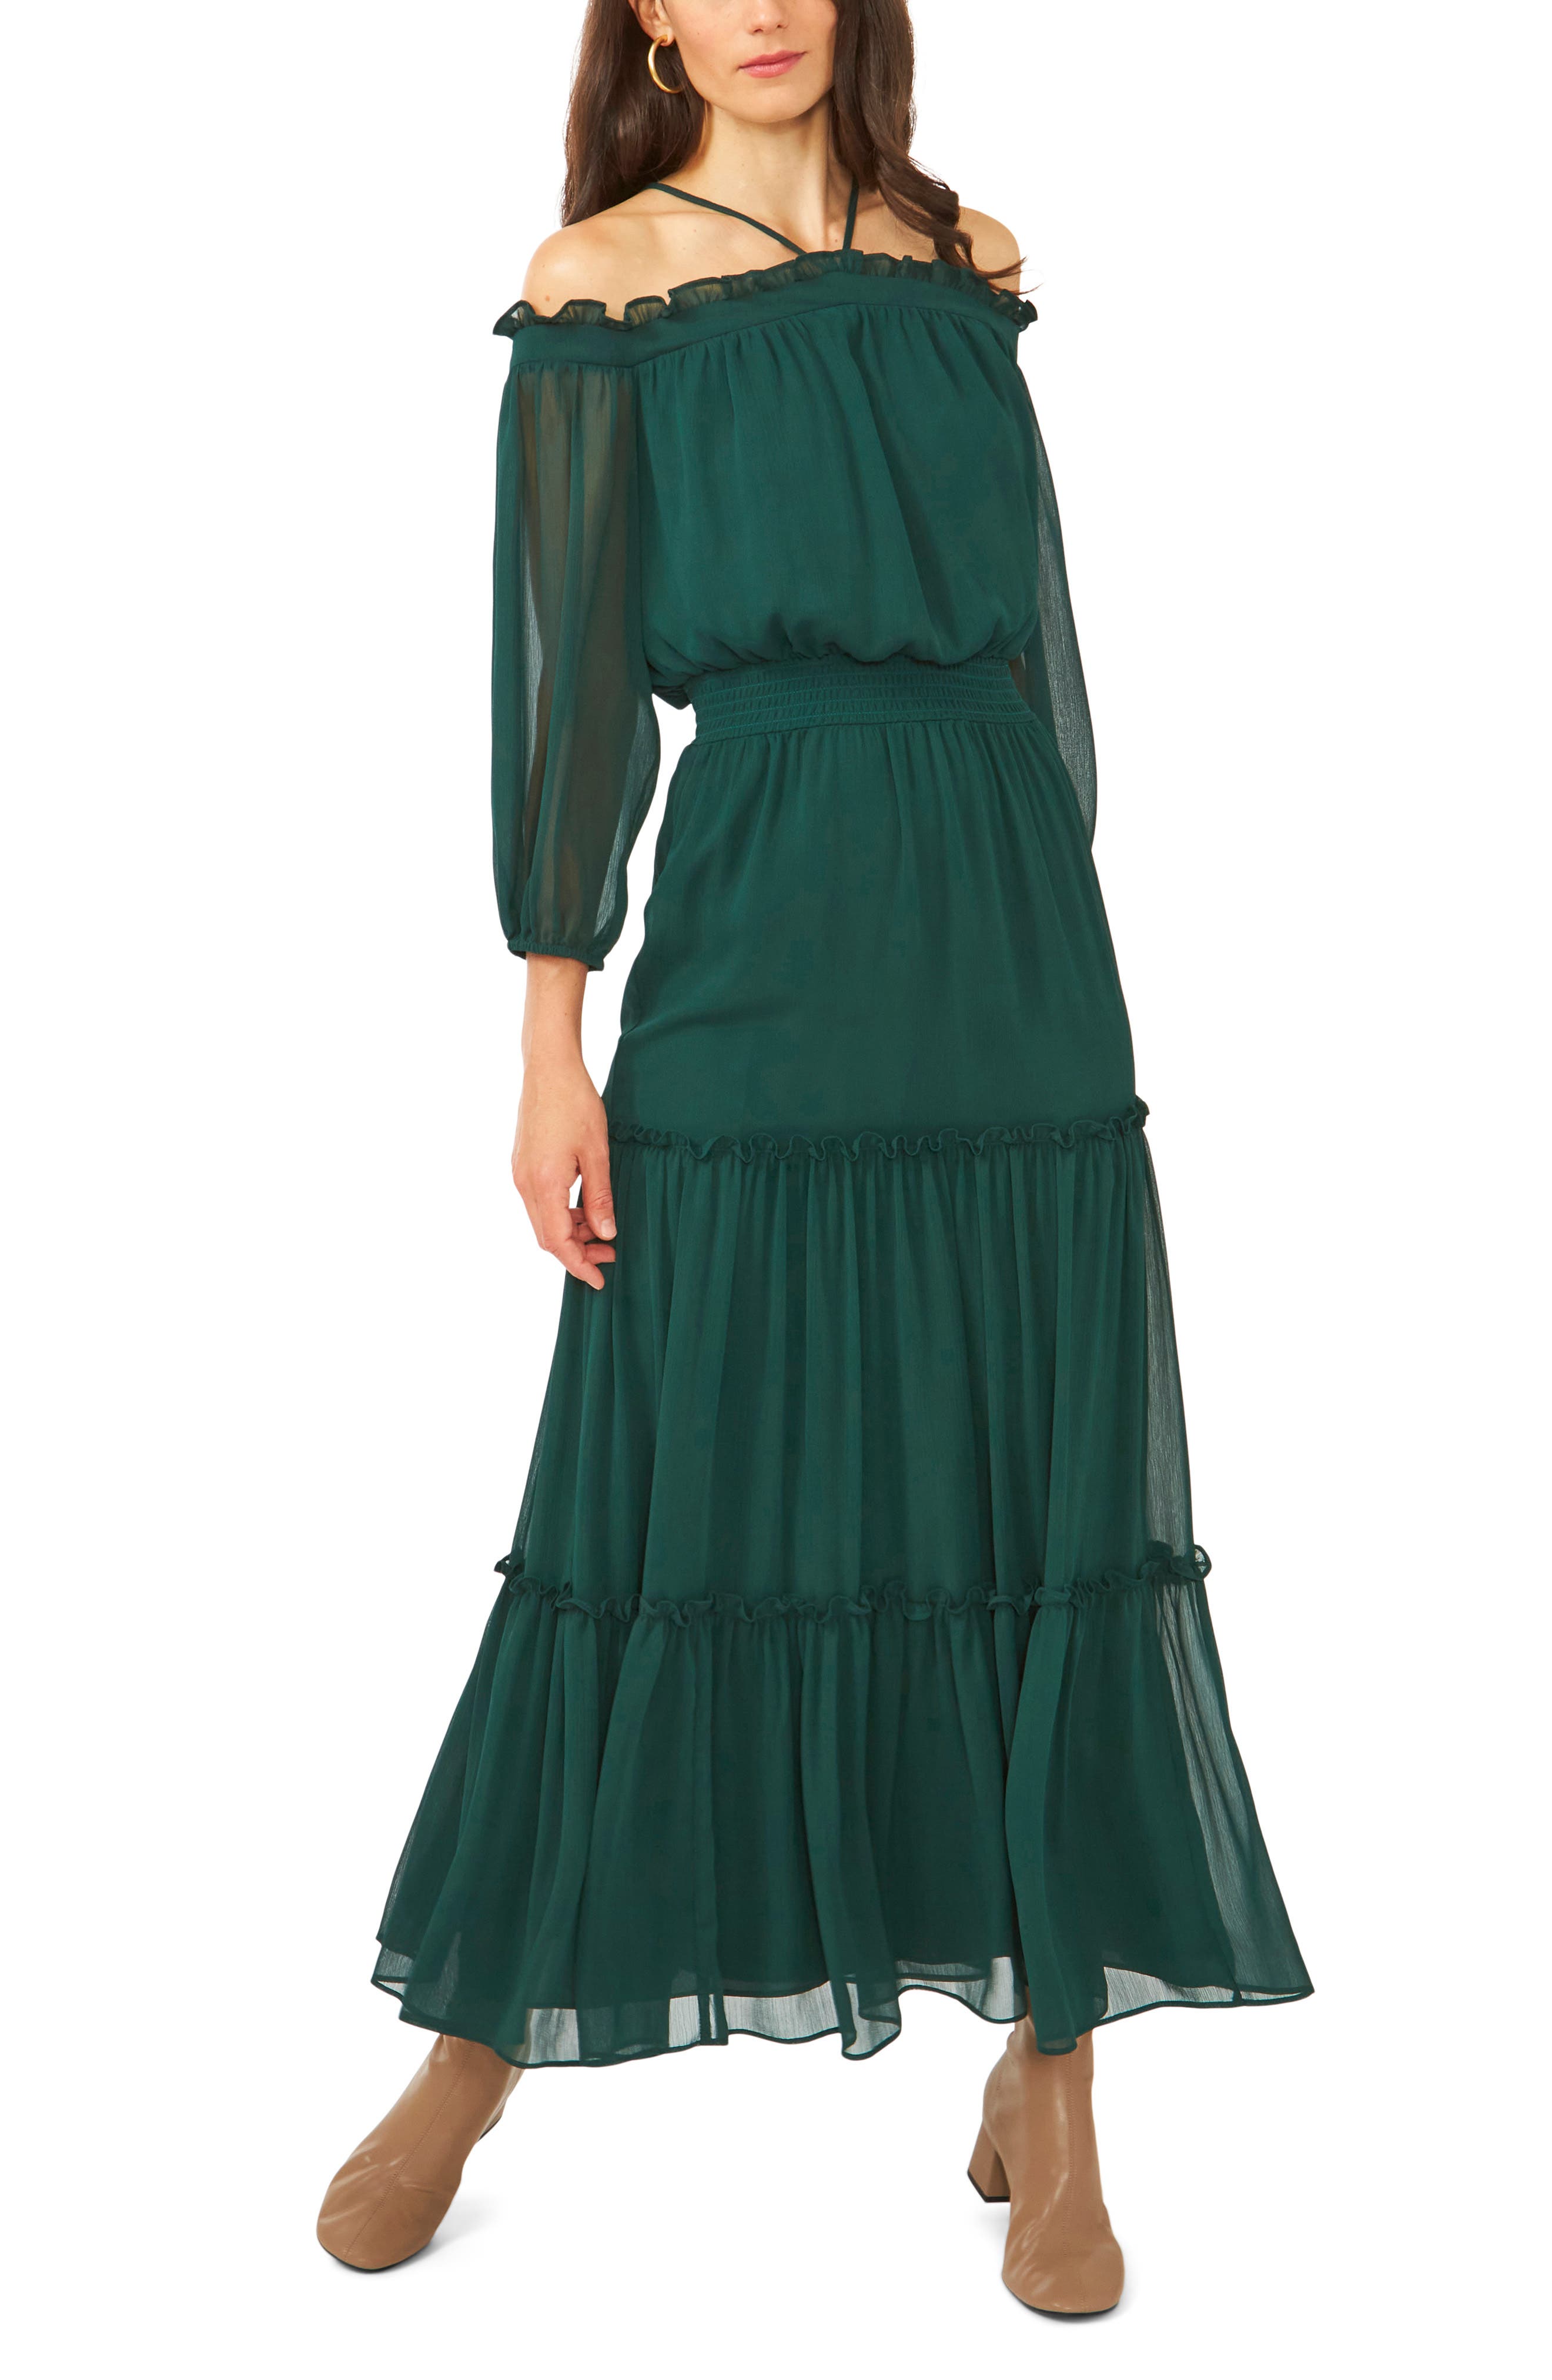 green maxi dress